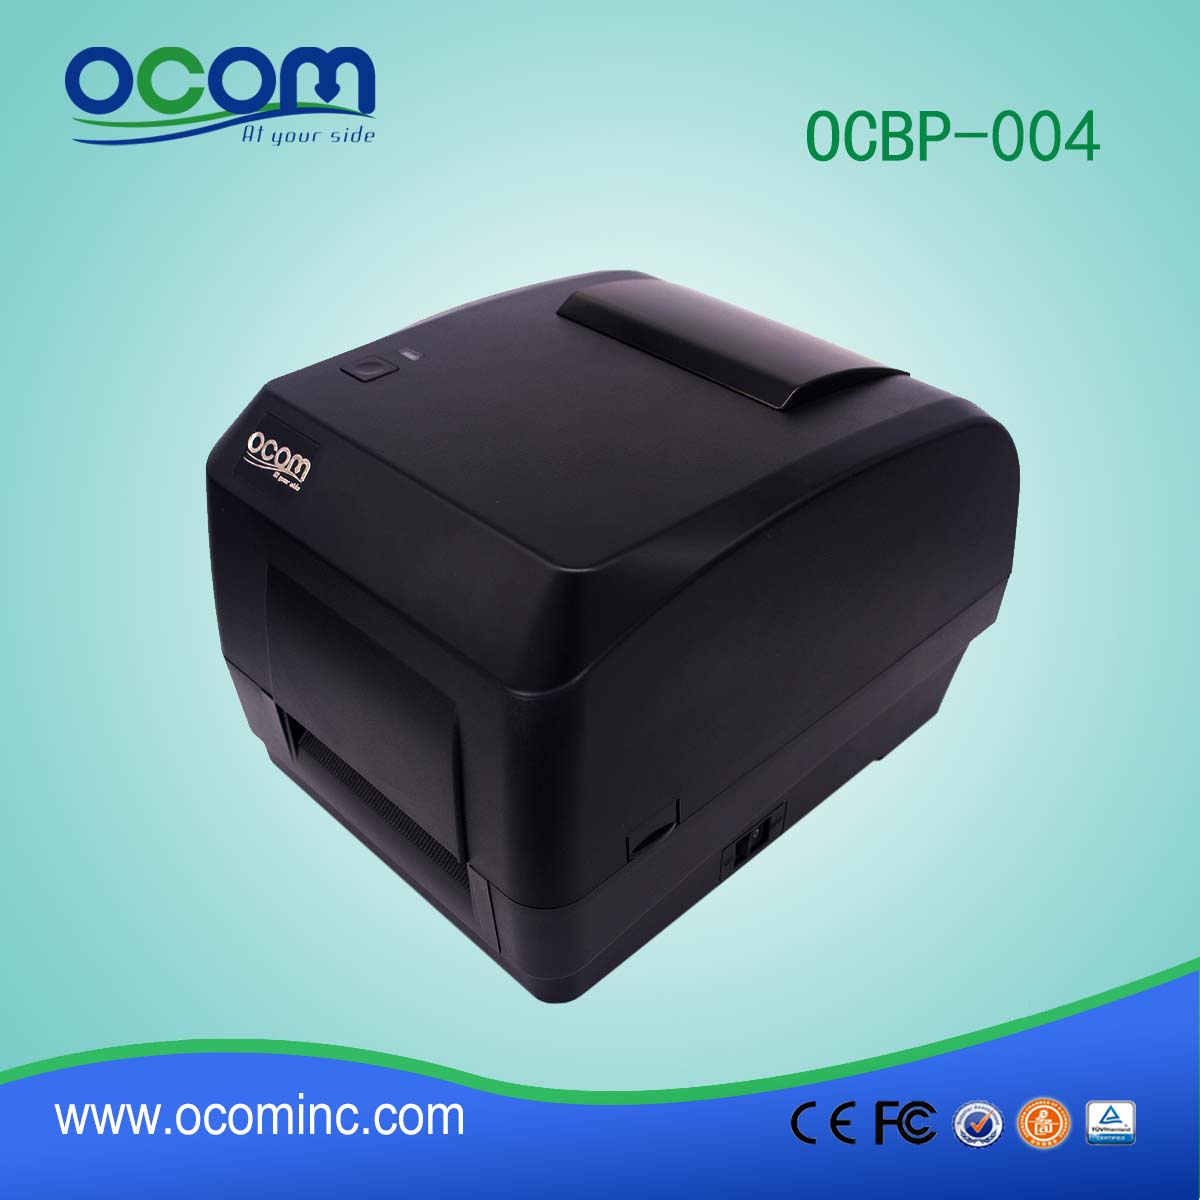 OCBP-004B-L 300DPI Θερμική μεταφορά και άμεση θερμική εκτύπωση ετικετών γραμμωτού κώδικα